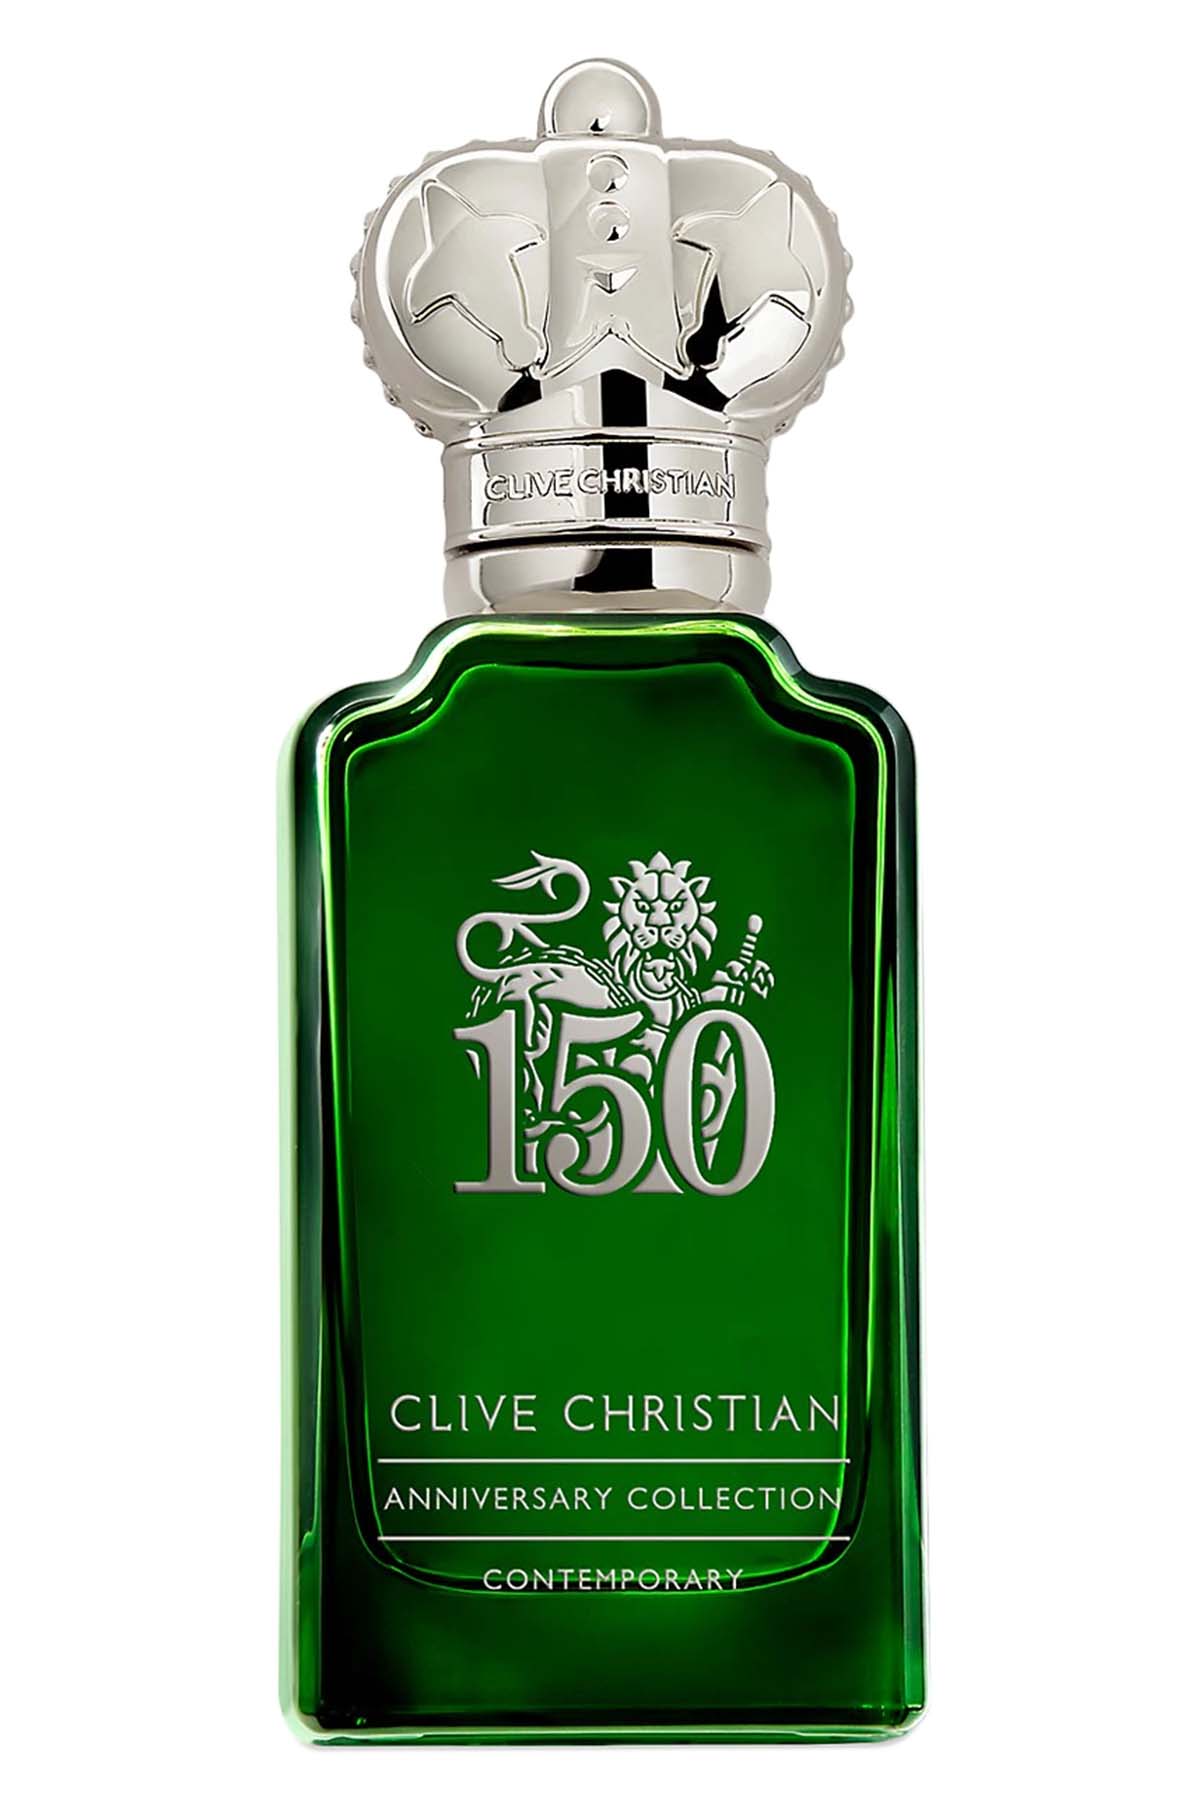 Clive Christian 150th Anniversary Contemporary Eau de Parfum